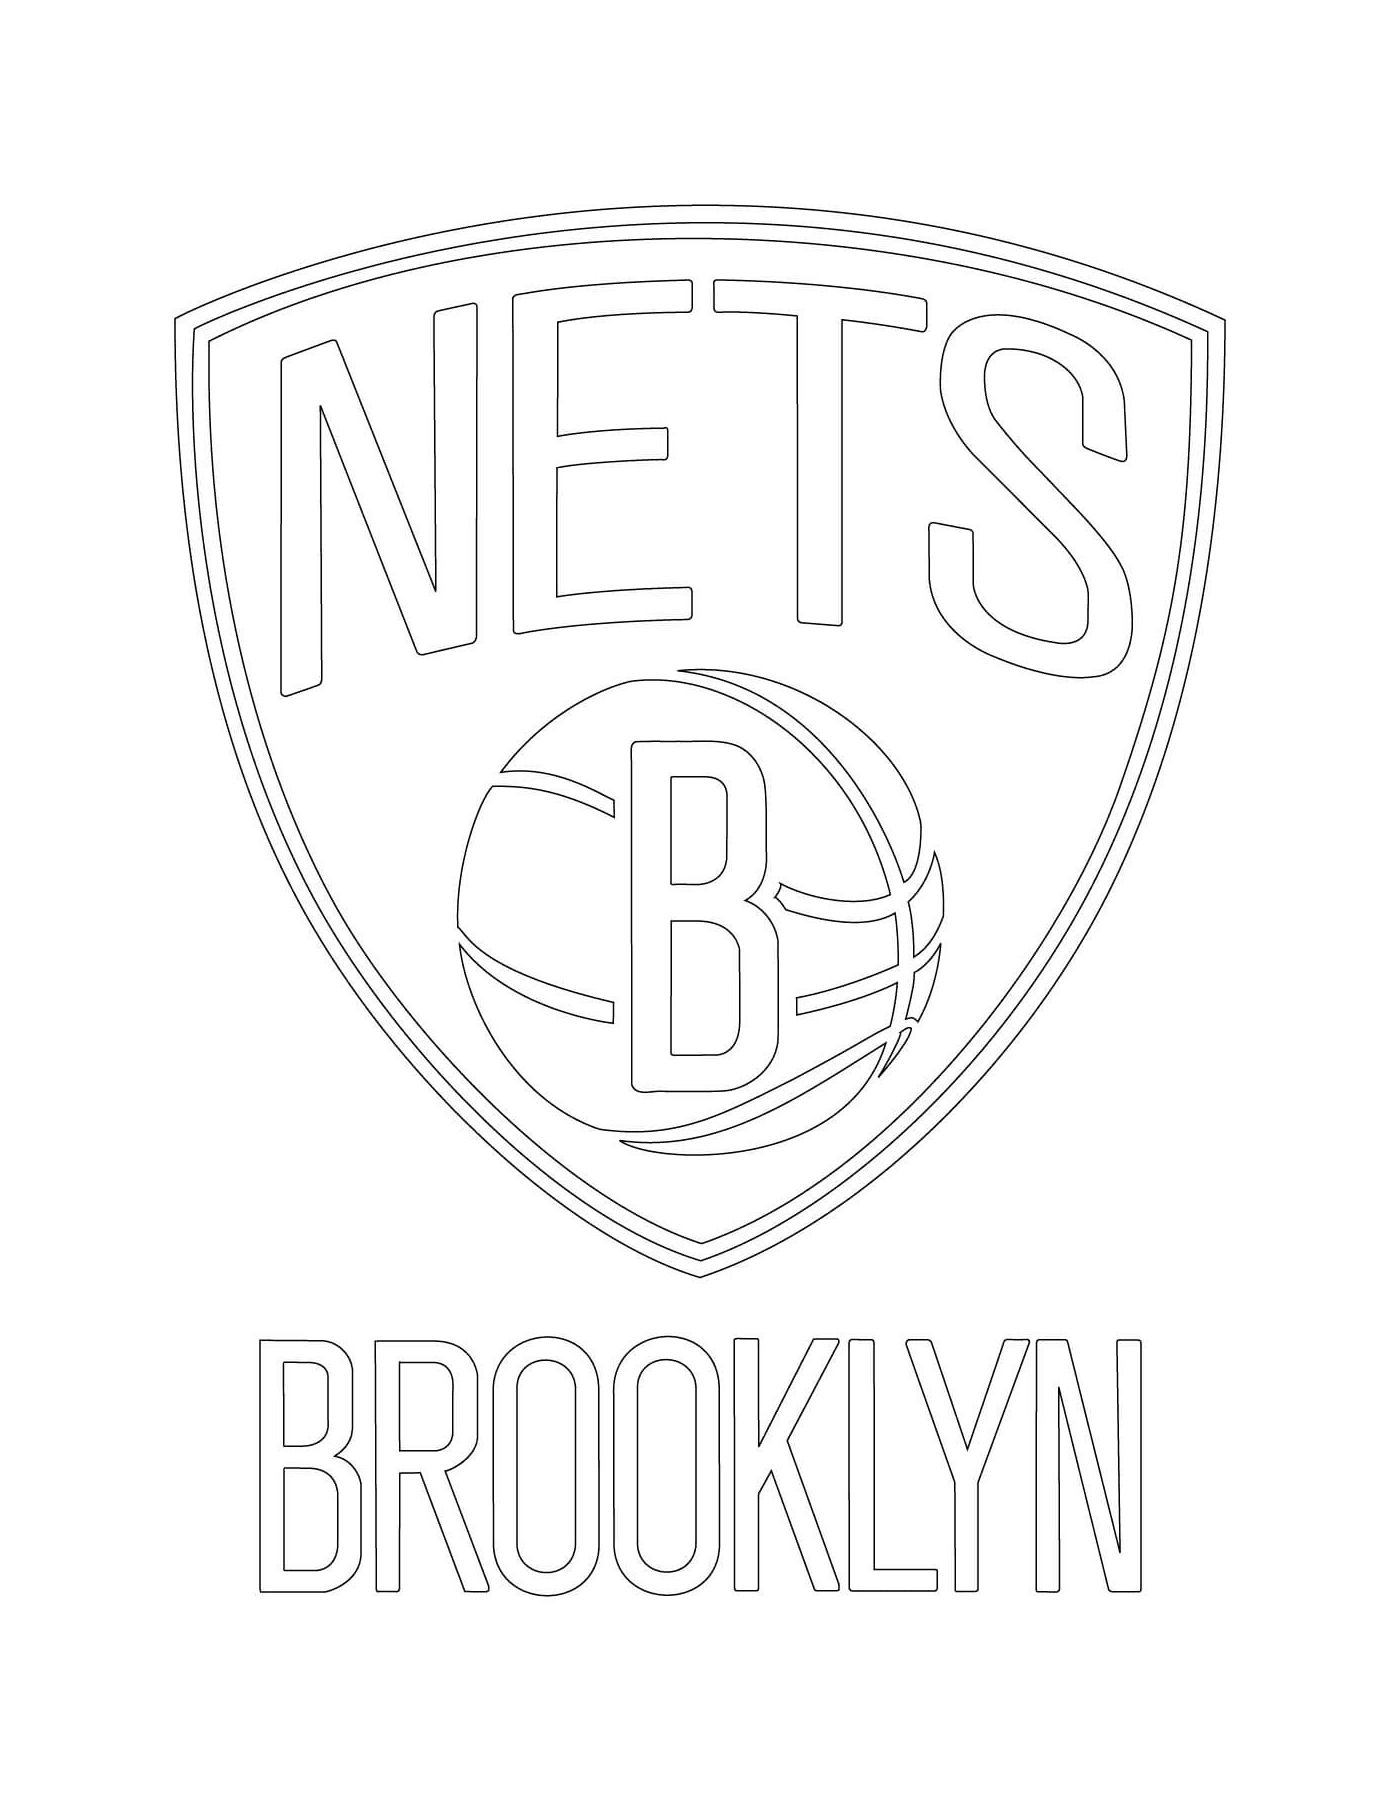   Le logo des Brooklyn Nets, équipe de basketball 